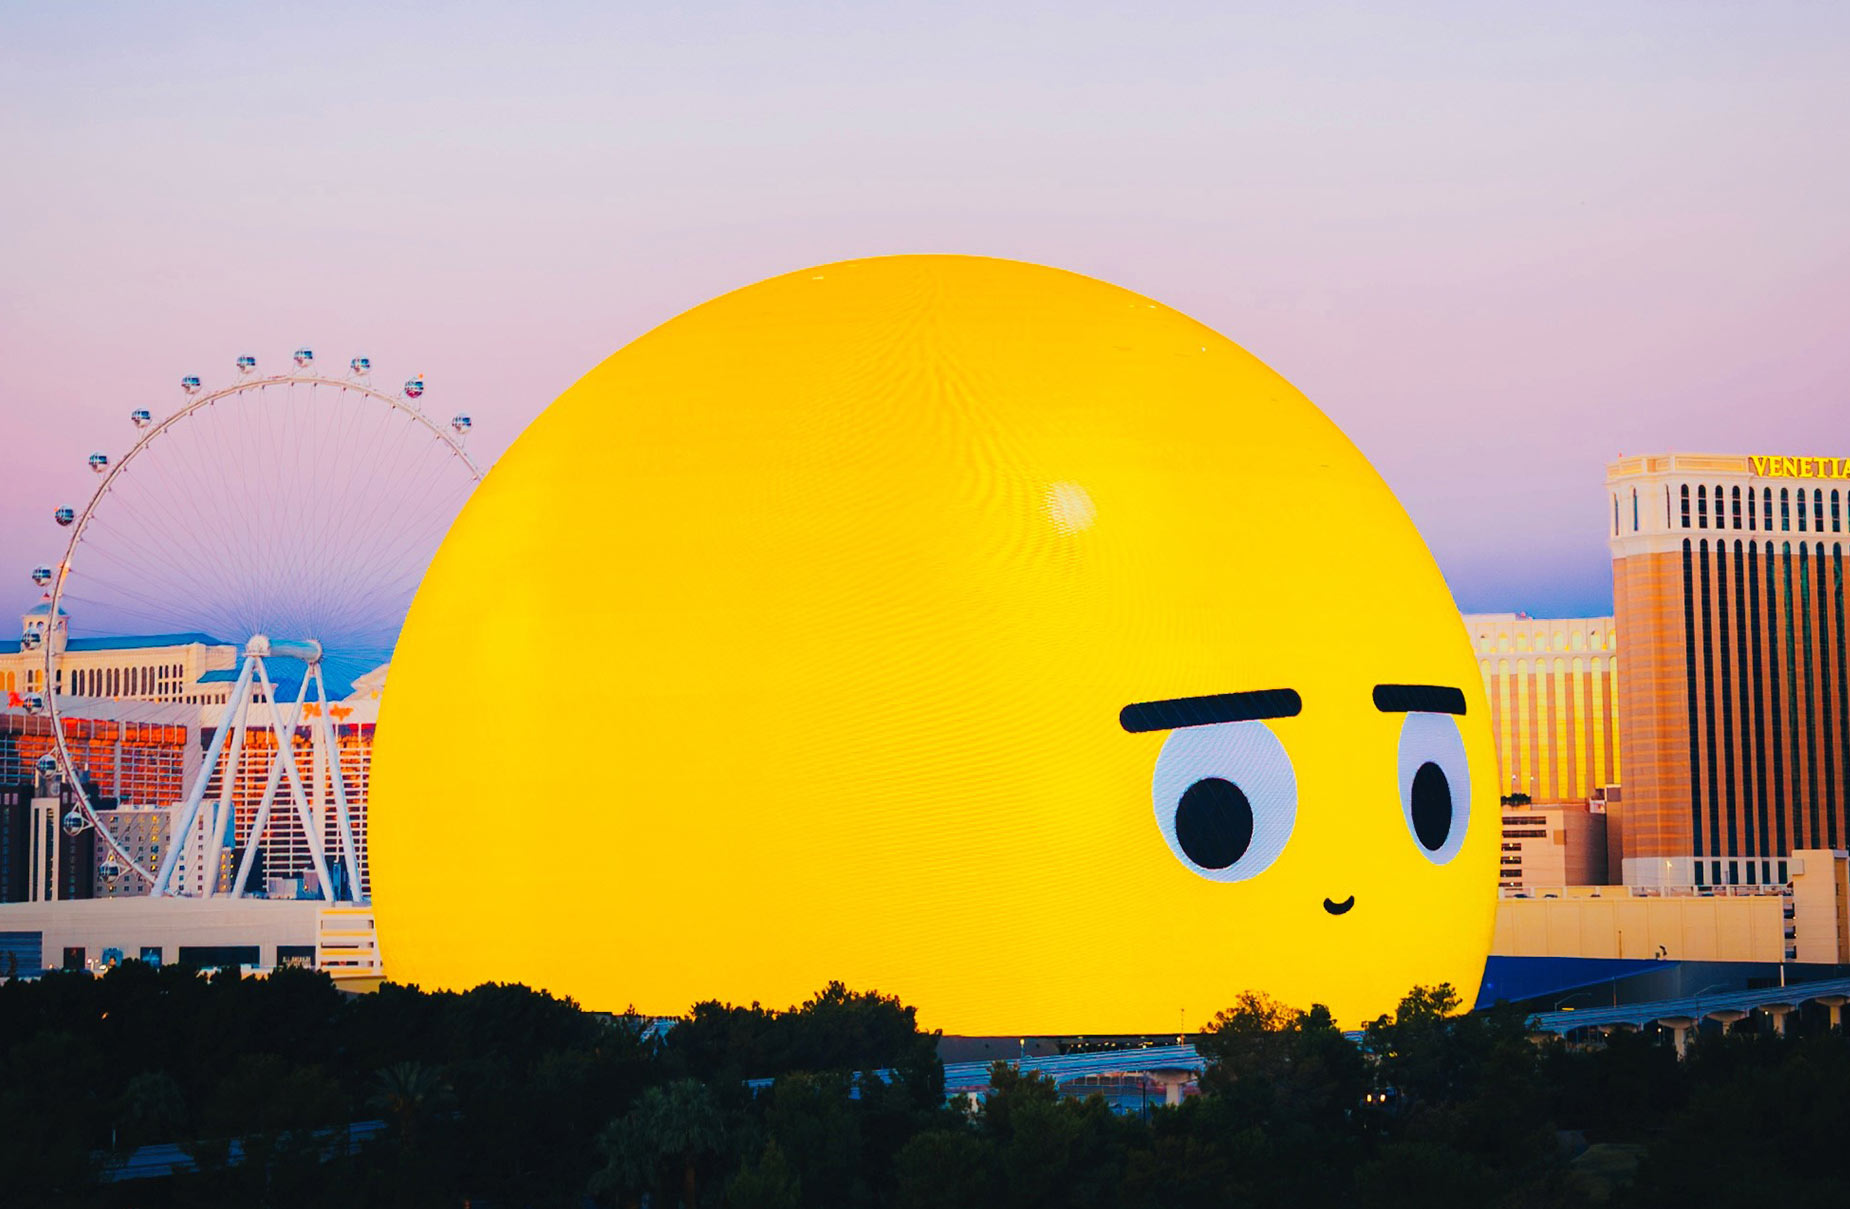 The Sphere emoji